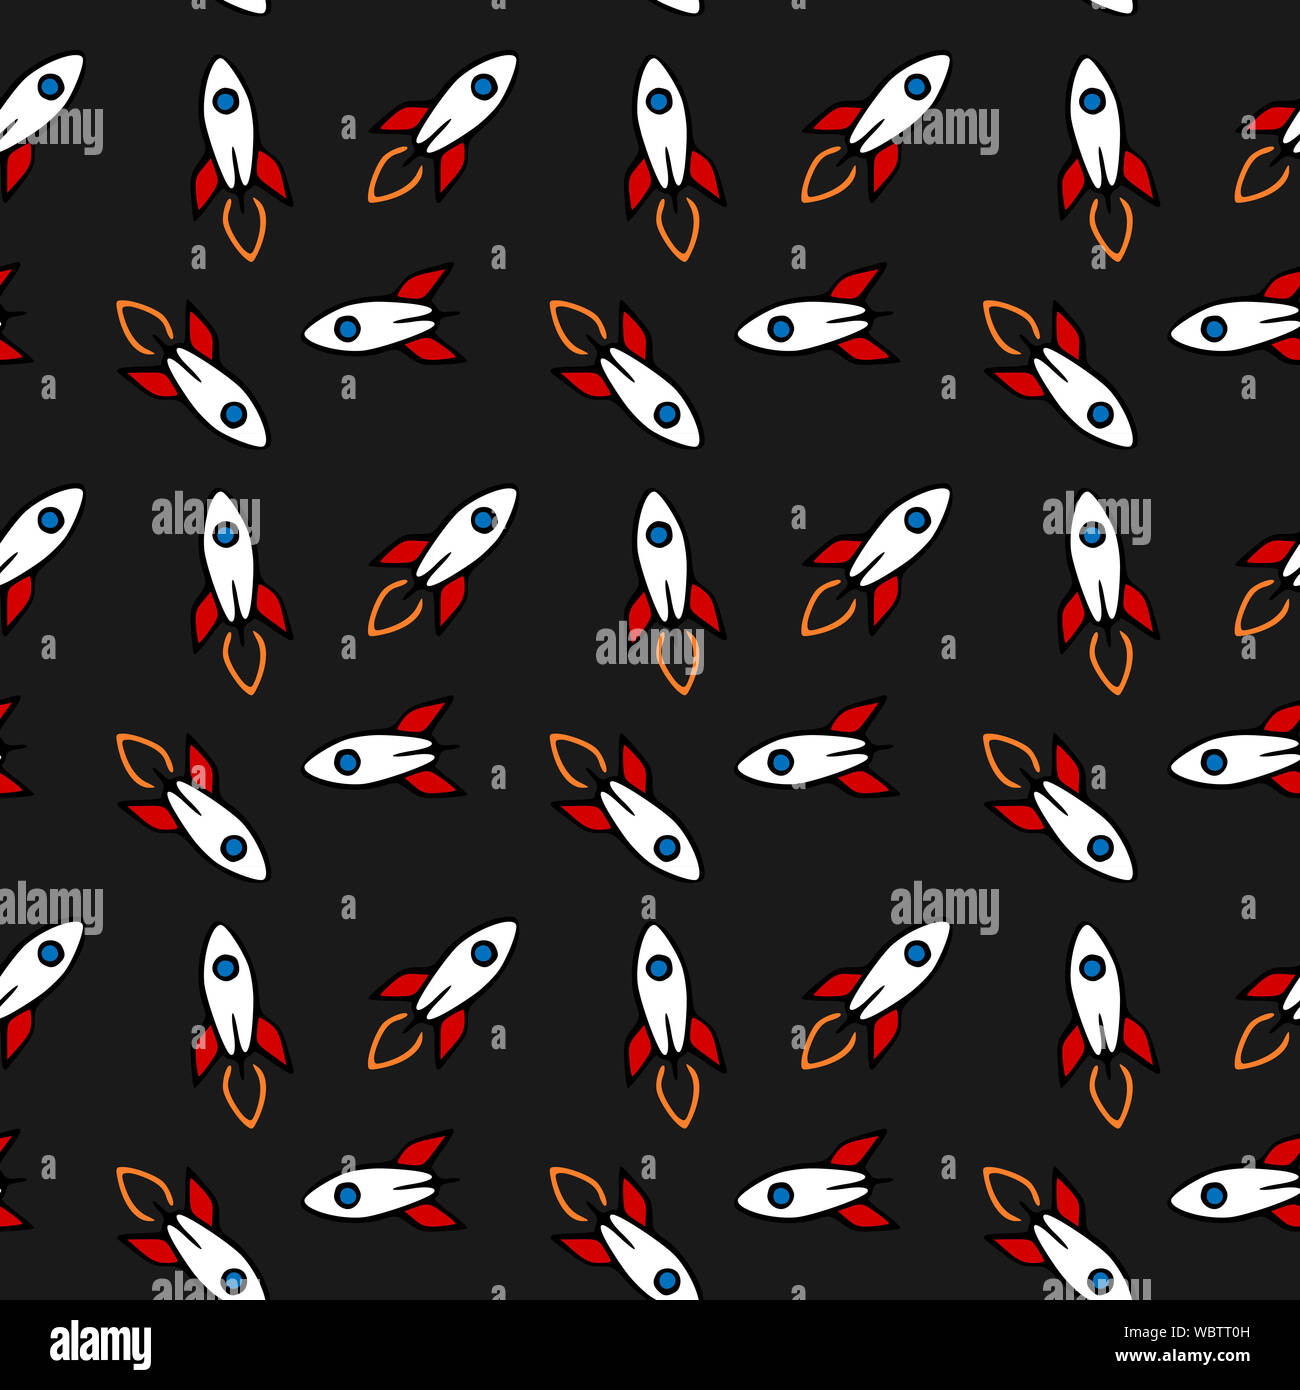 Rocket icon seamless pattern on black background. Spaceship vector illustration Stock Photo